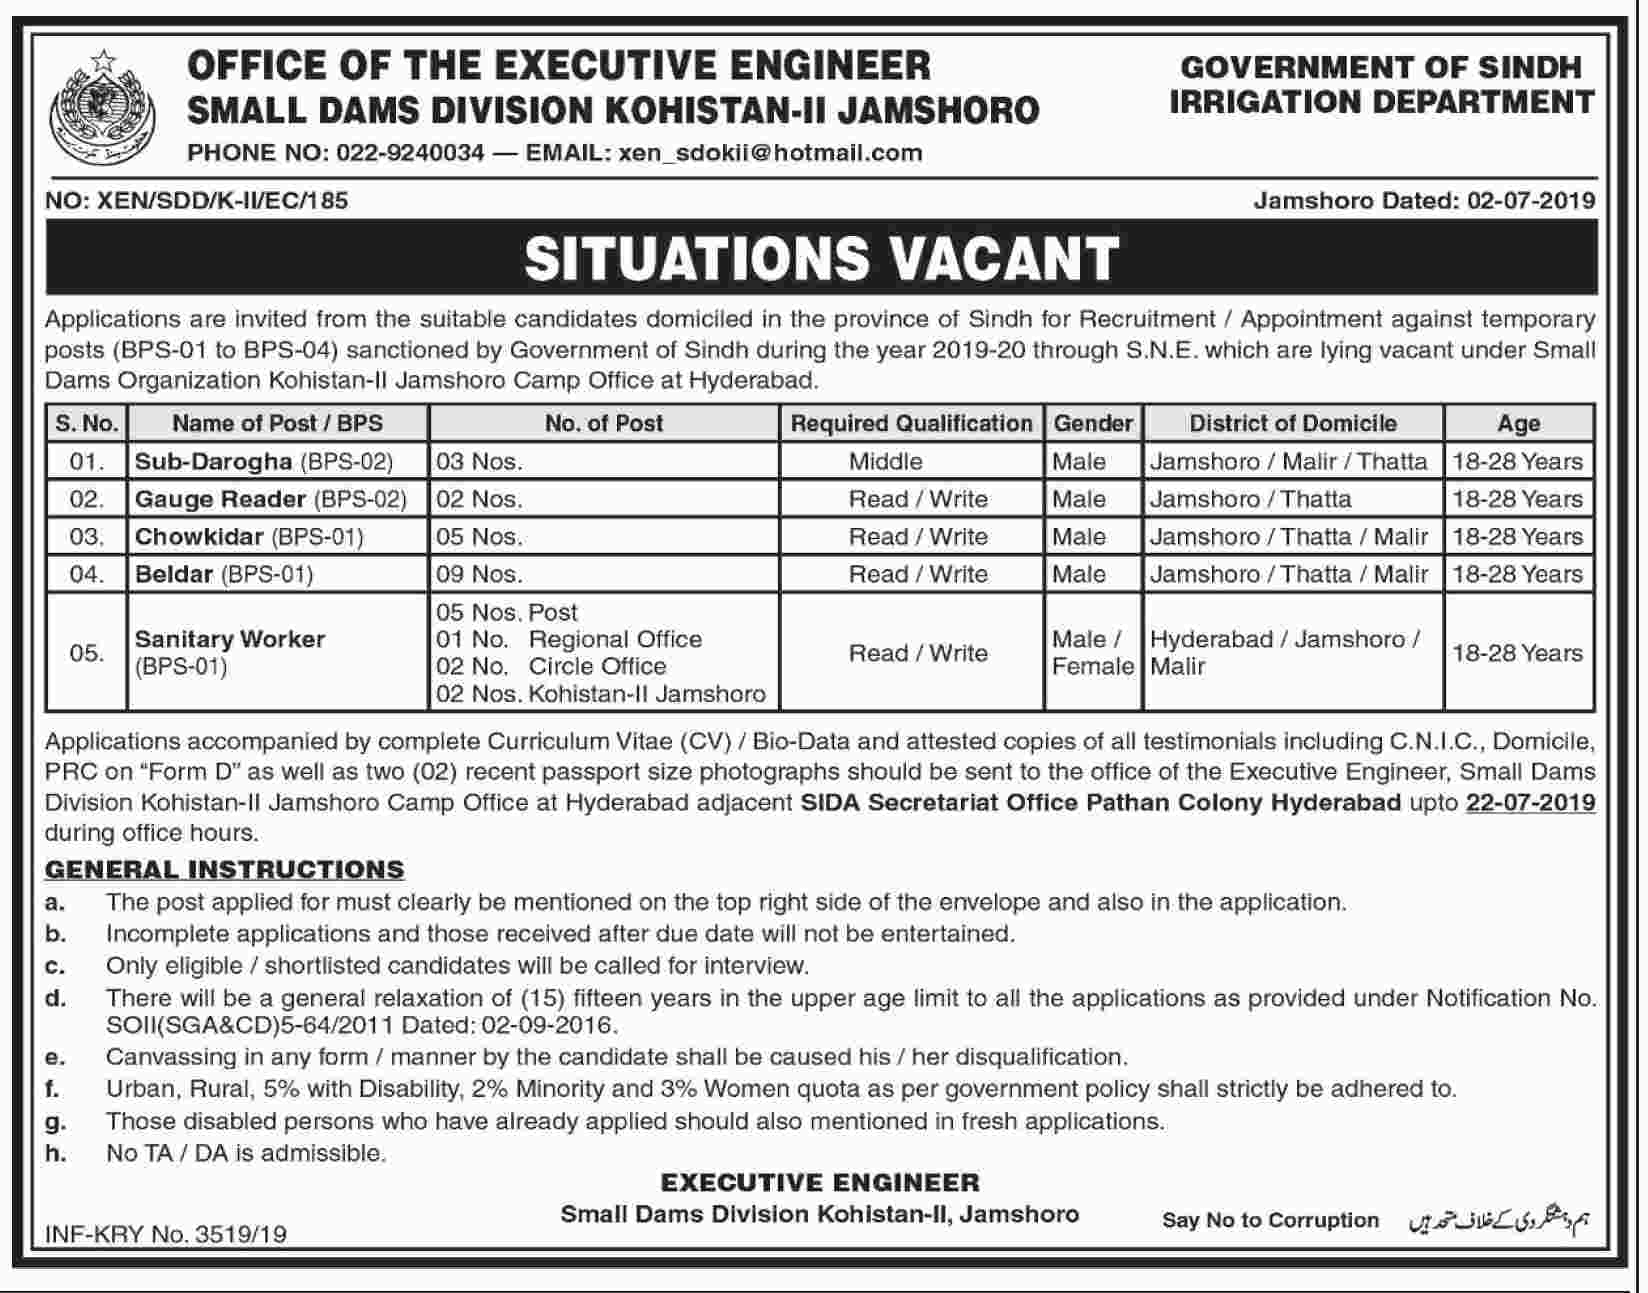 Irrigation Department Govt of Sindh jobs 2019